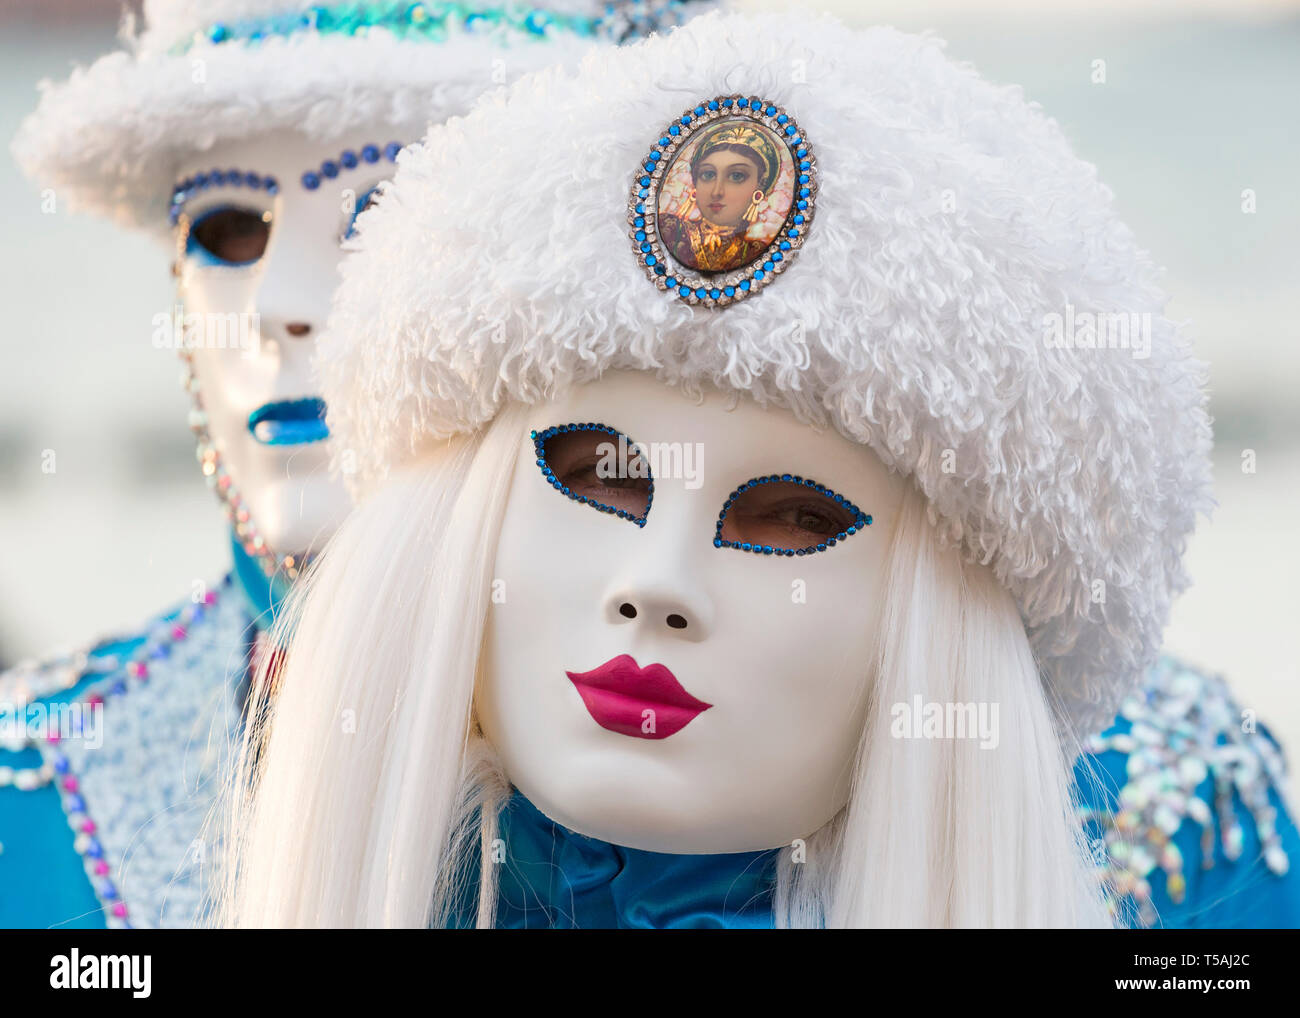 Maschera bianca, il carnevale di Venezia, Italia Foto stock - Alamy